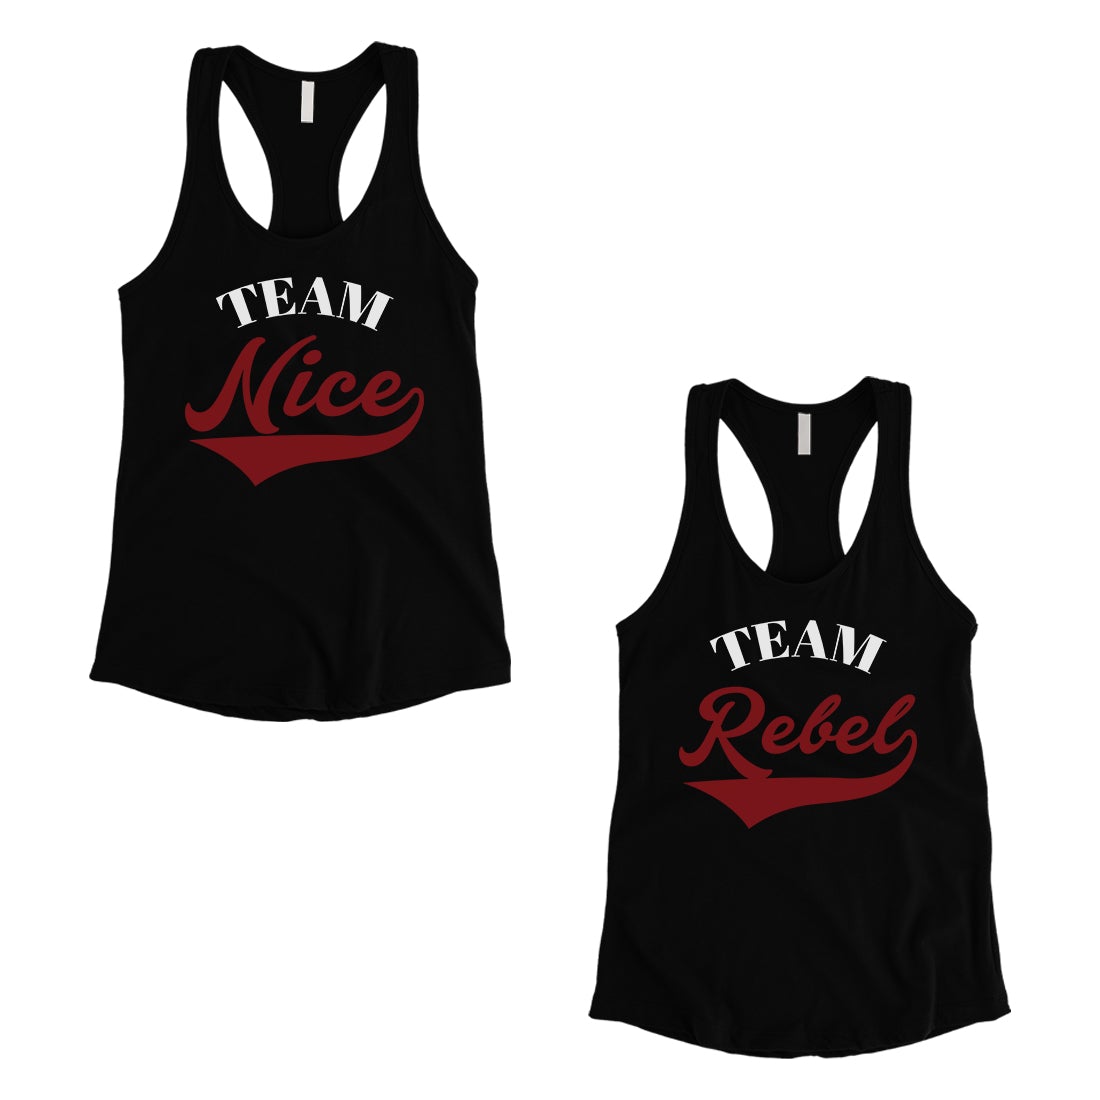 Team Nice Team Rebel Best Friend Tank Tops Womens Workout Tanks Black